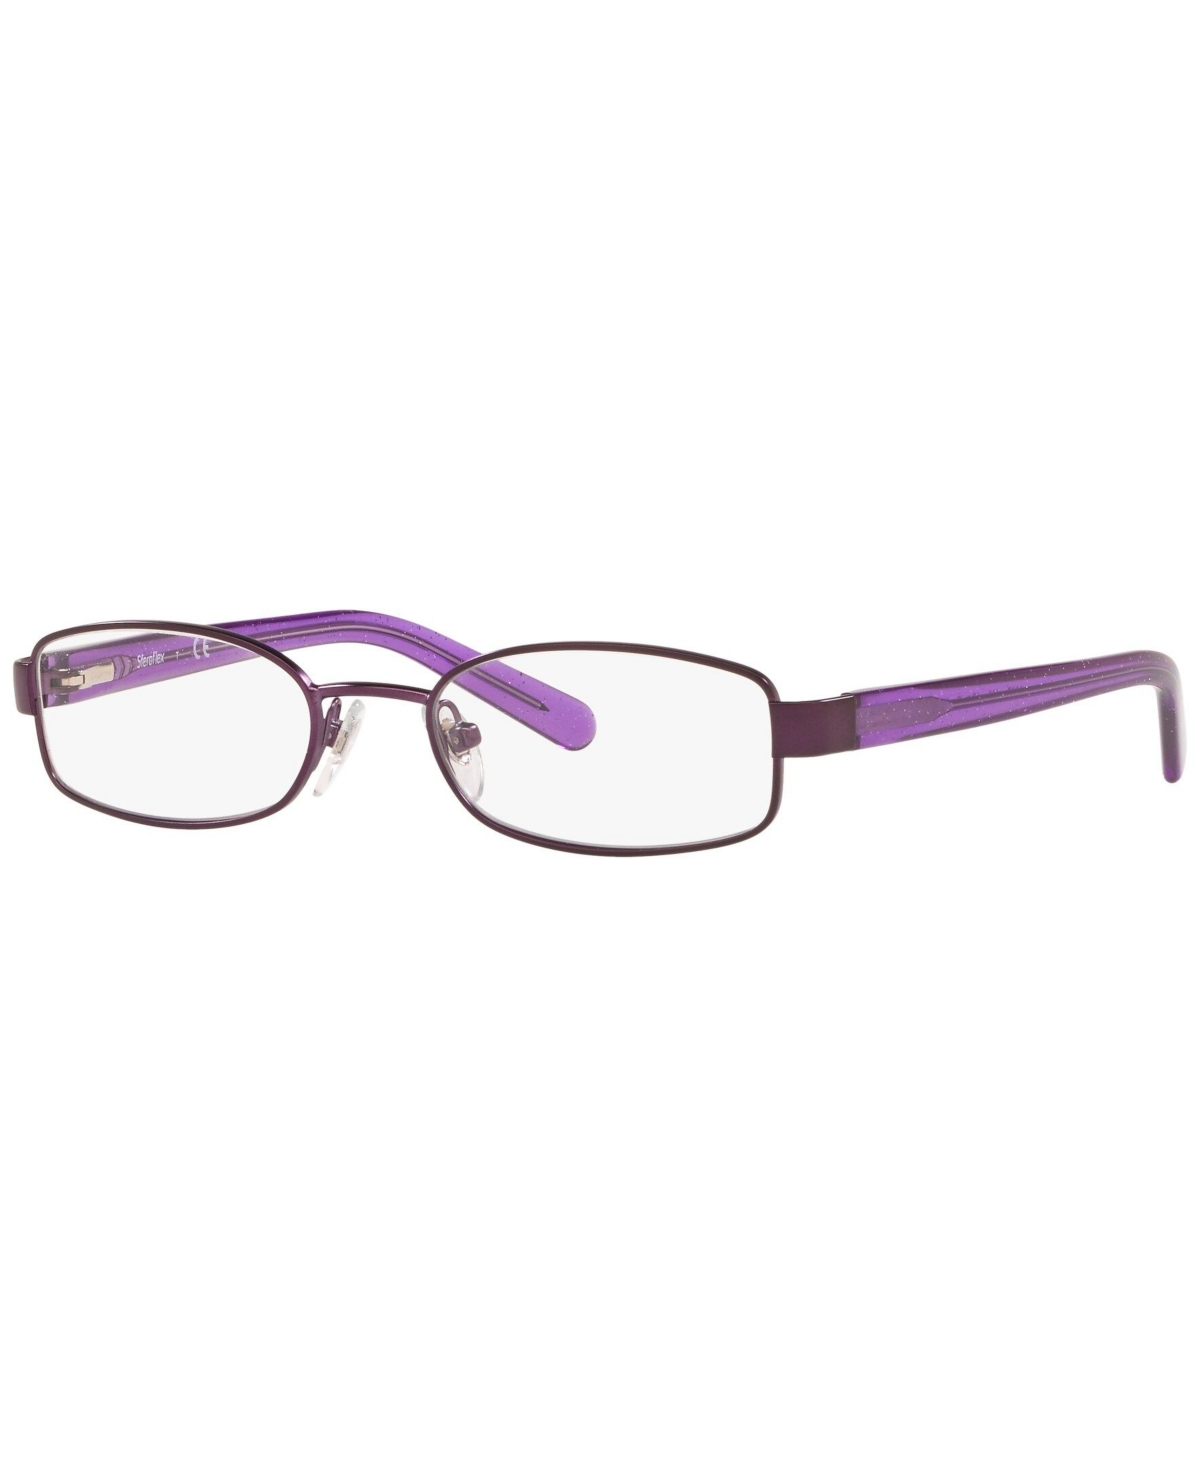 SF2857 Unisex Rectangle Eyeglasses - Matte Pink